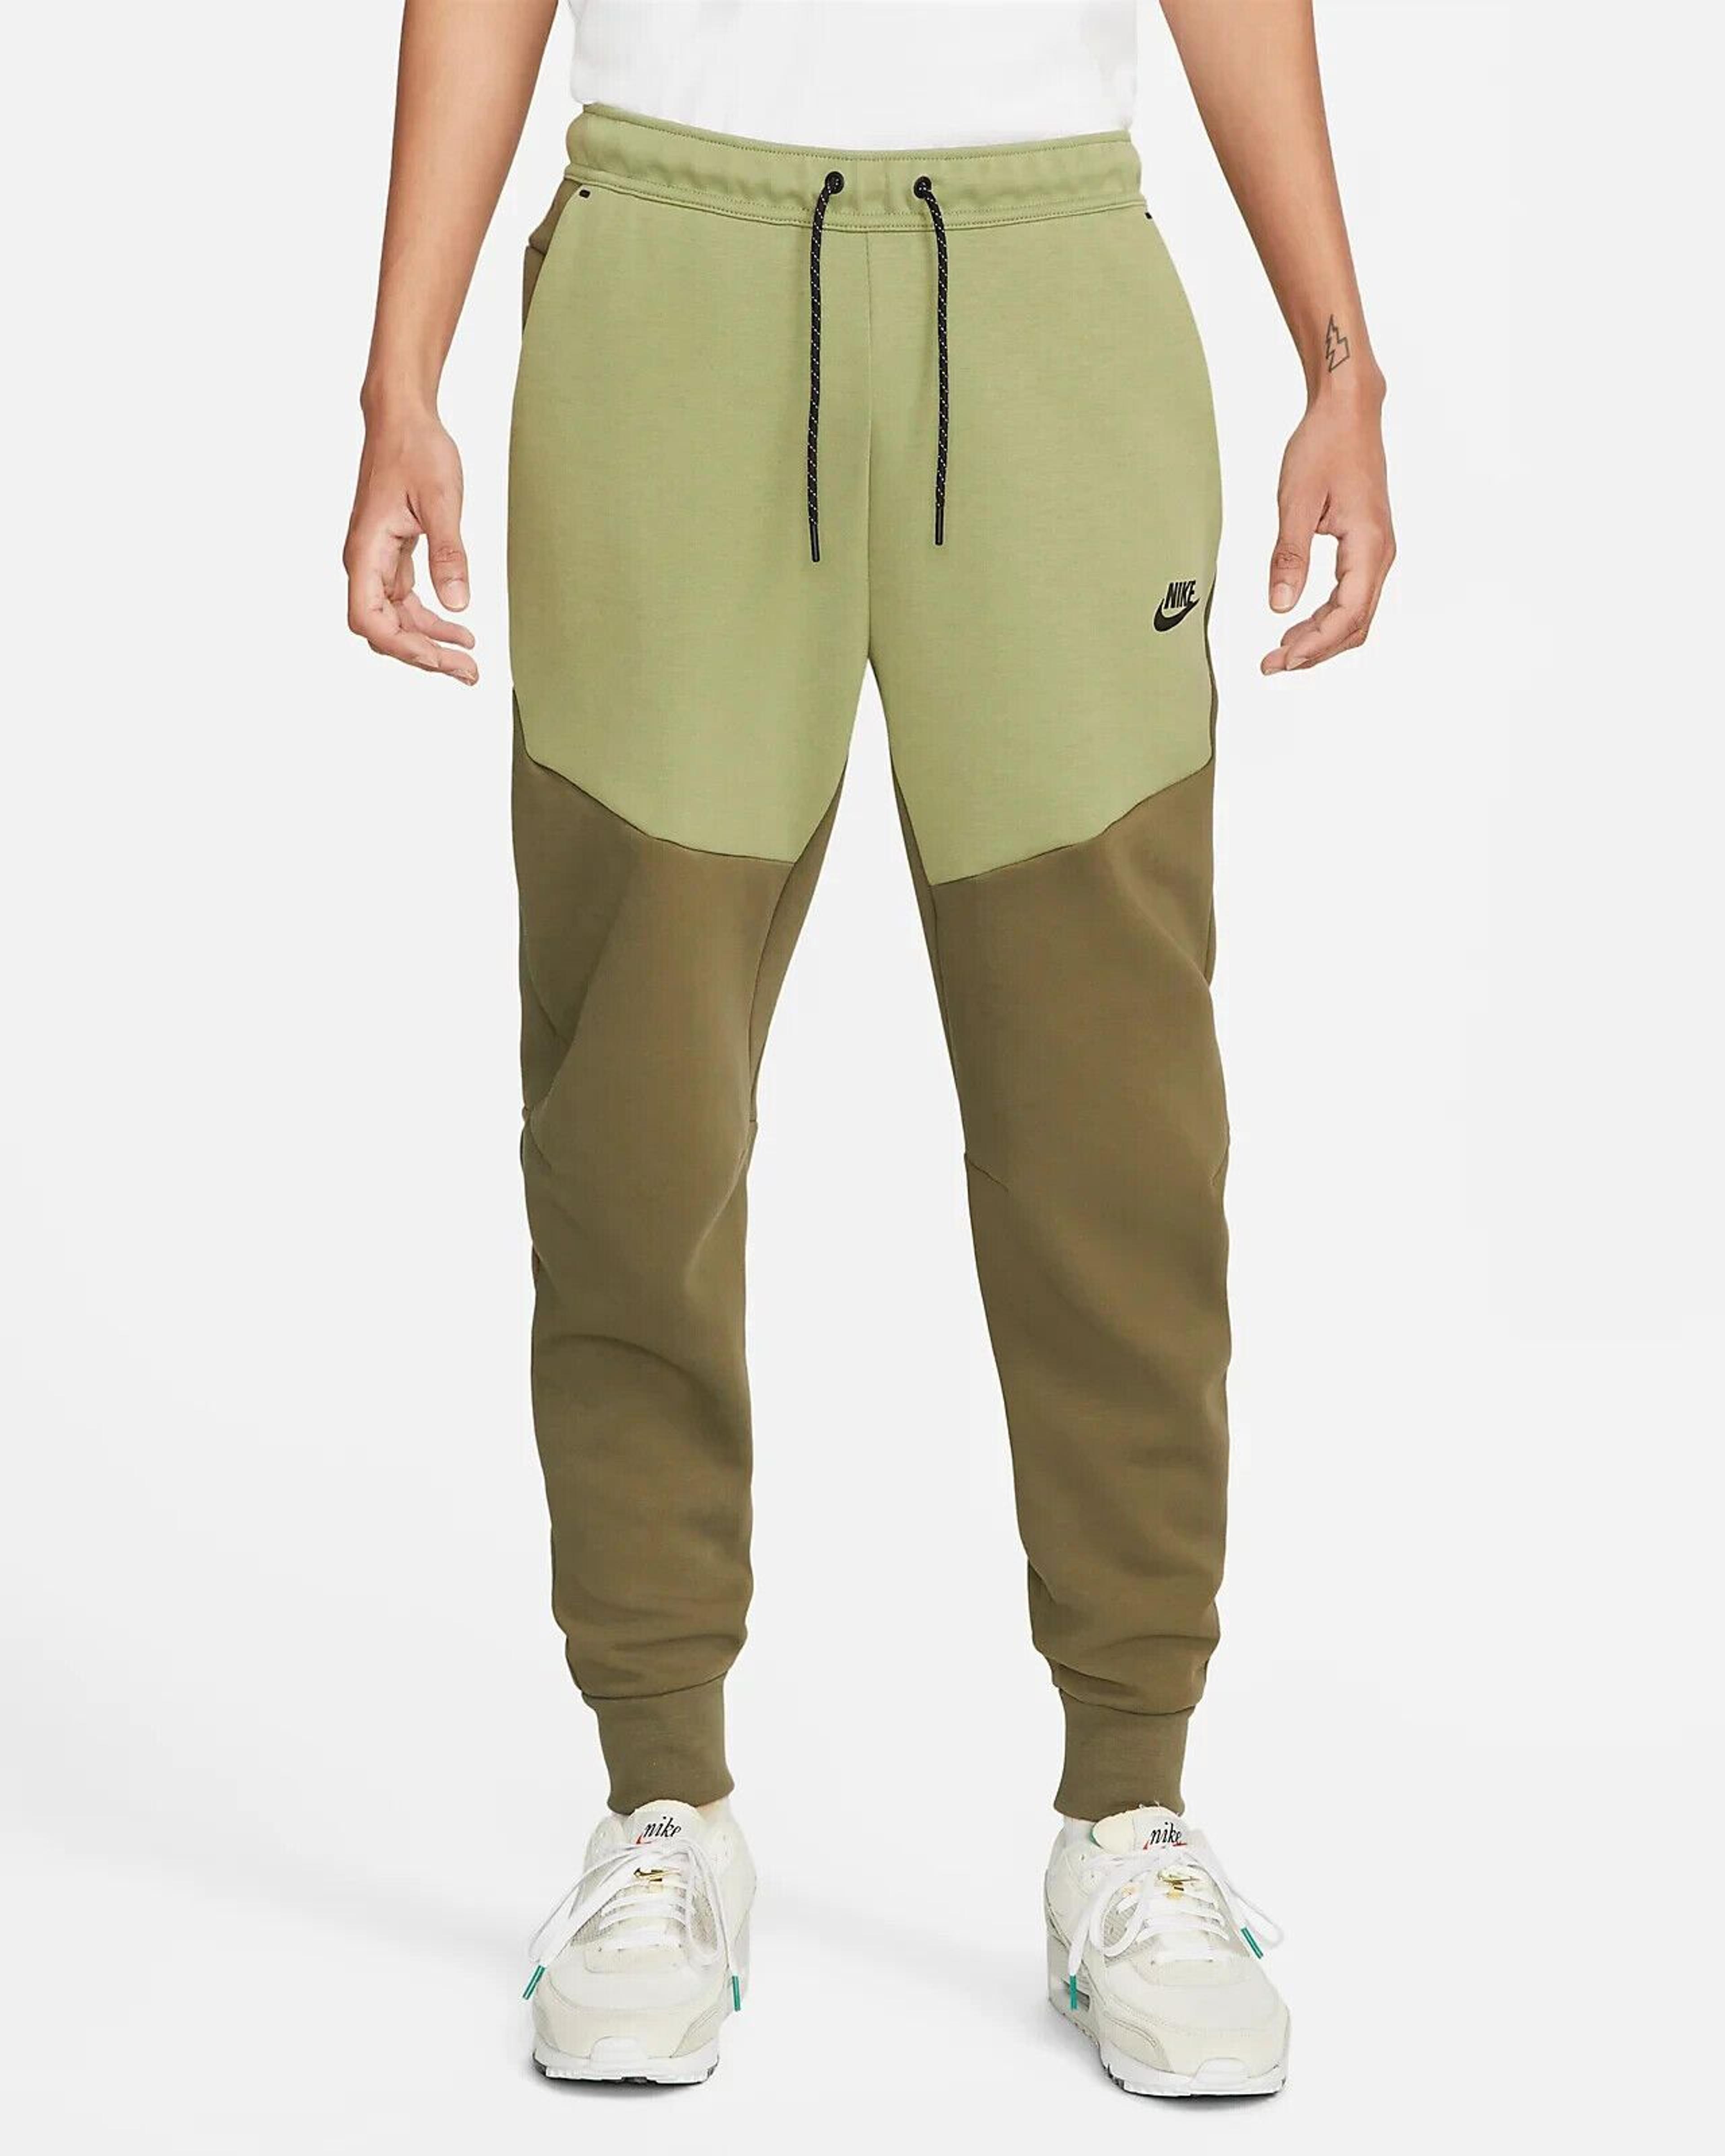 Nike Tech Fleece Joggers Pants Sweats Alligator Green Cu4495-222 Men's M Medium